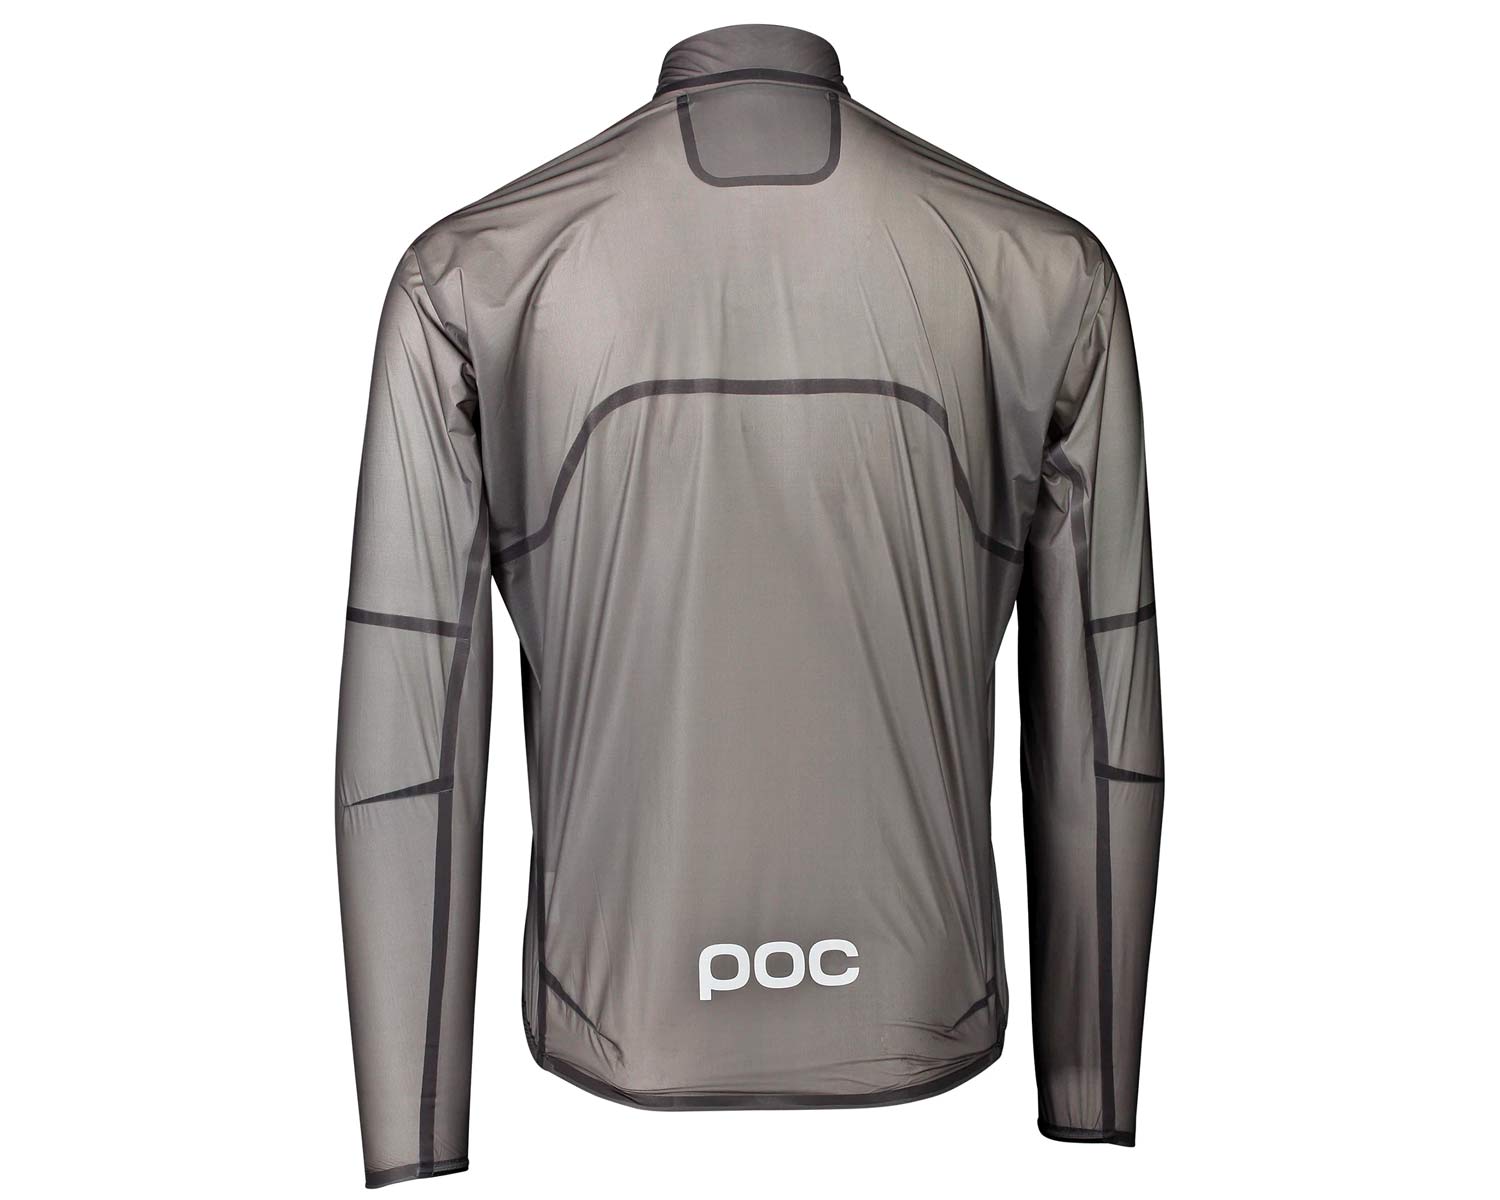 POC Supreme Rain Jacket ultralight 3-layer waterproof protection, rear